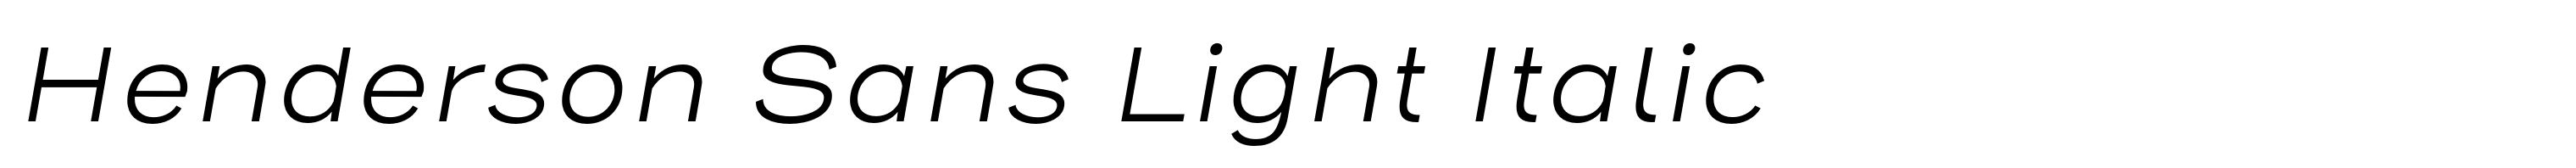 Henderson Sans Light Italic